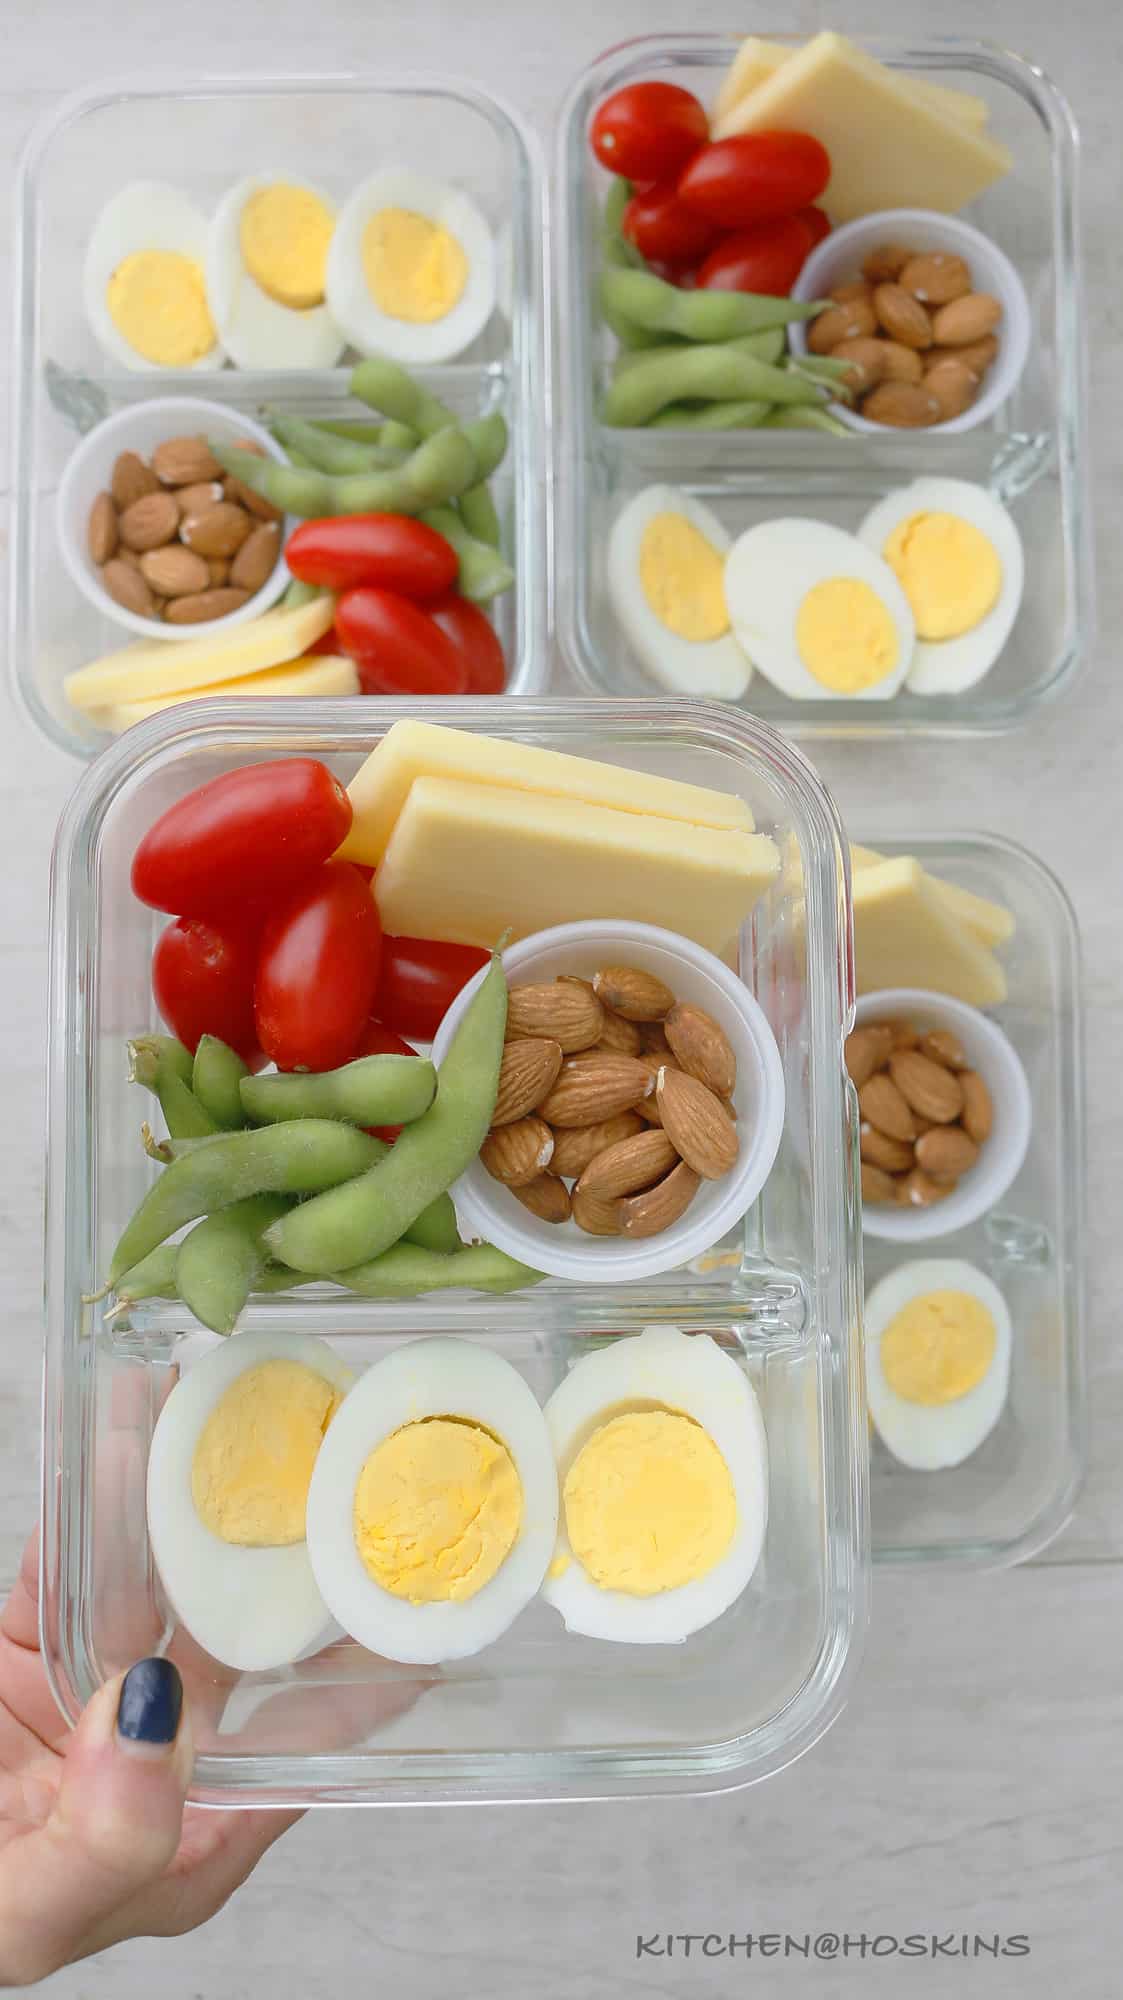 https://www.kitchenathoskins.com/wp-content/uploads/2019/11/diy-protein-snack-box-1@.jpg